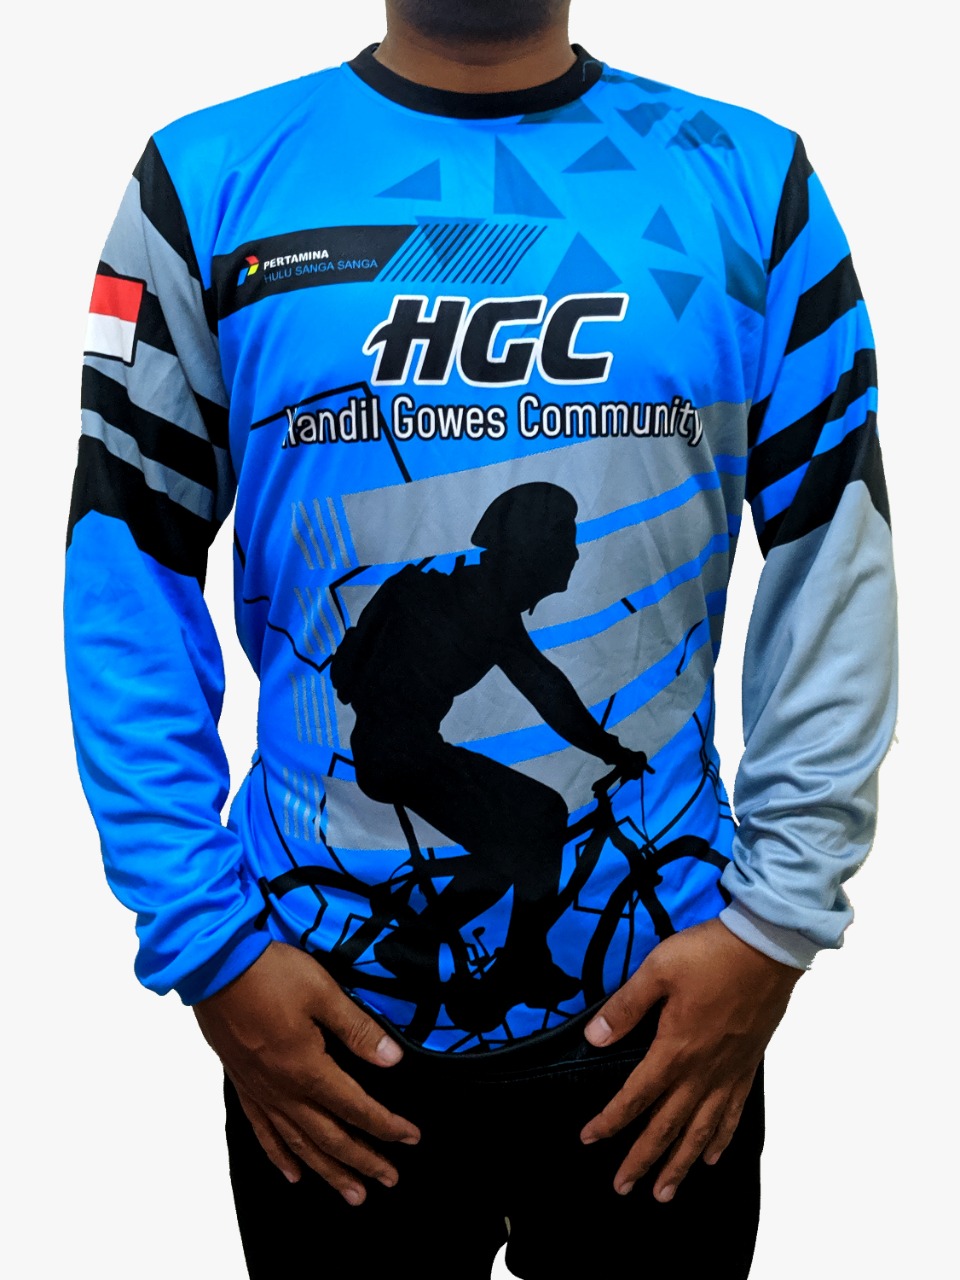 Bikin kaos baju seragam jersey printing sepeda futsal mancing bola custom bekasi jakarta tangerang depok bogor bandung (37)